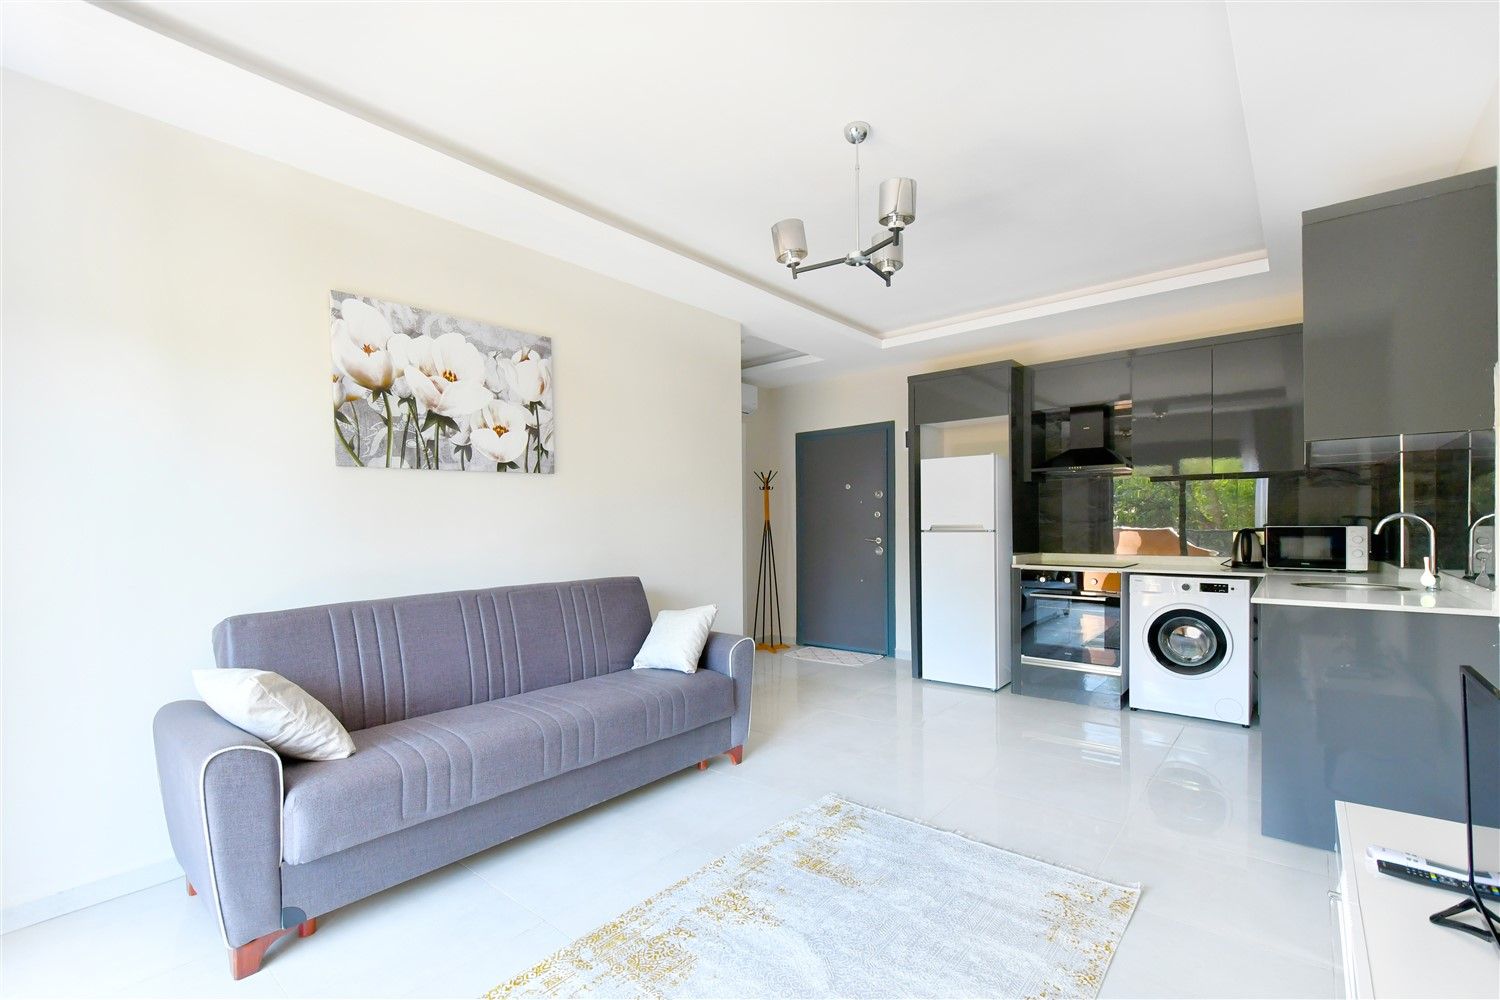 New furnished 1+1 apartment - Mahmutlar district